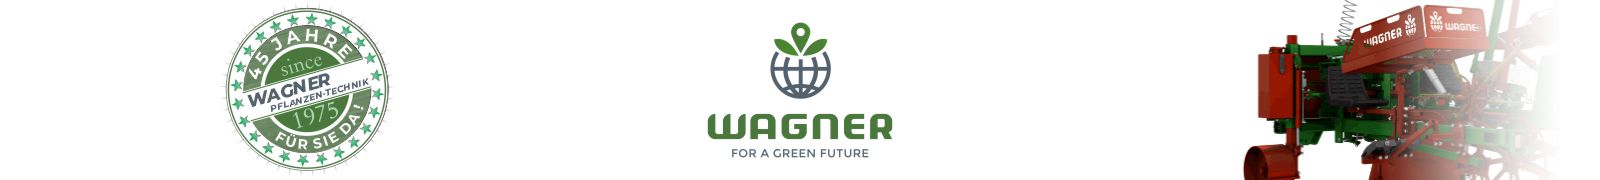 Wagner Pflanzen-Technik GmbH Logo